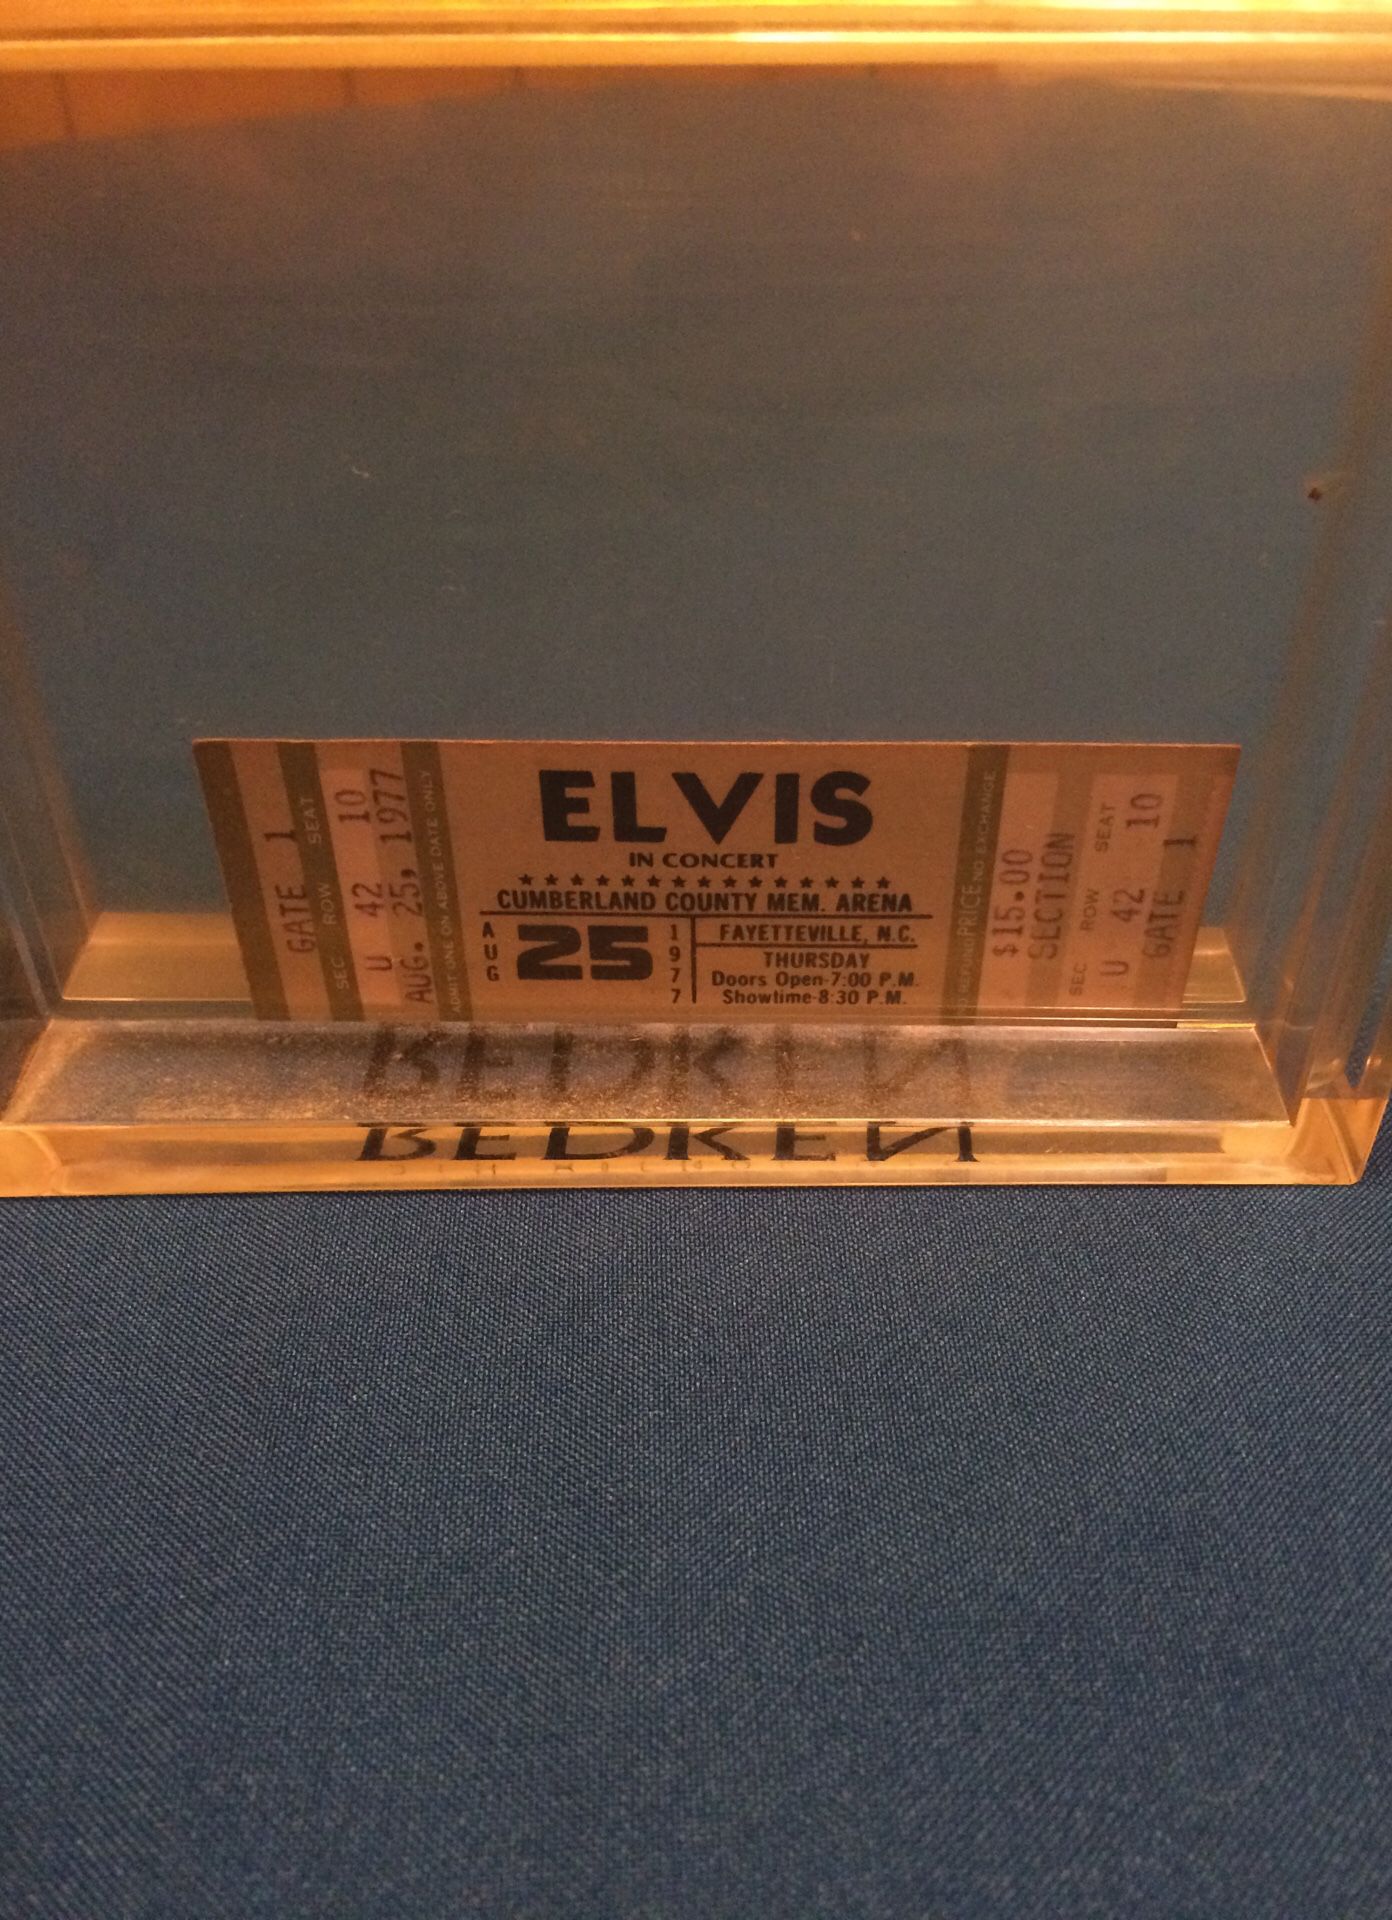 Concert ticket to see ELVIS